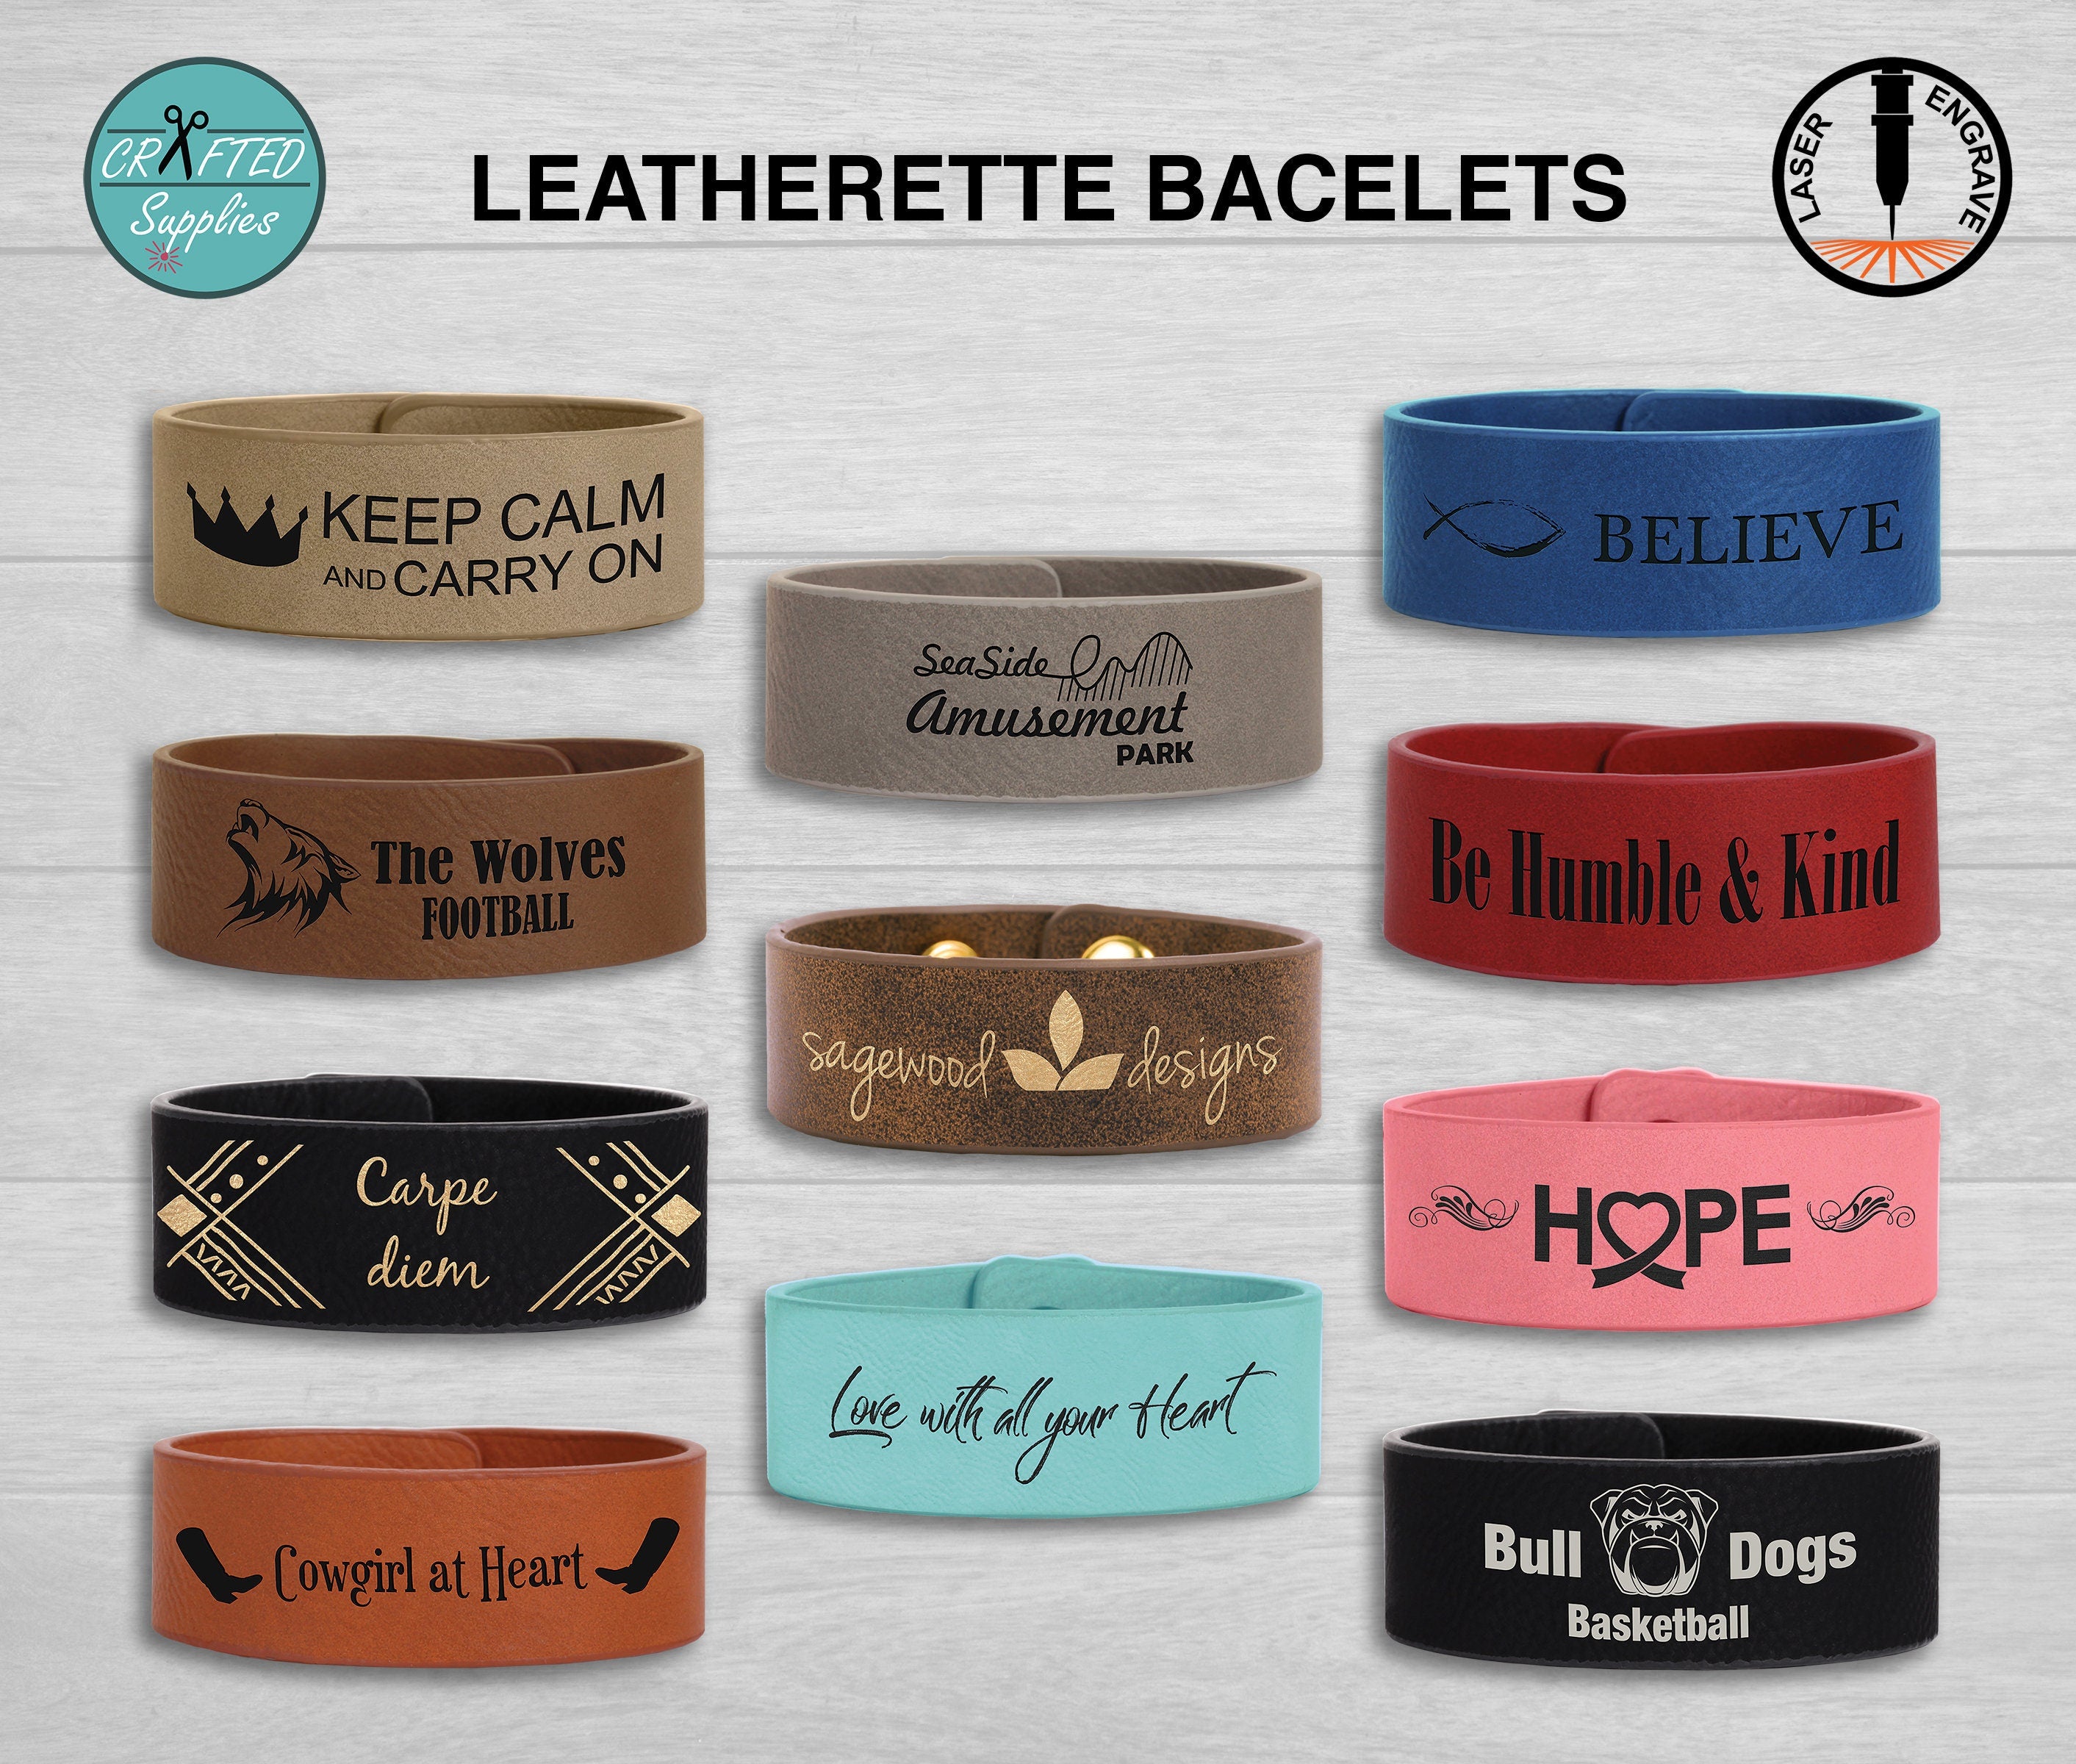 Leatherette Bracelet, Glowforge Laser Supplies Gray/ Black